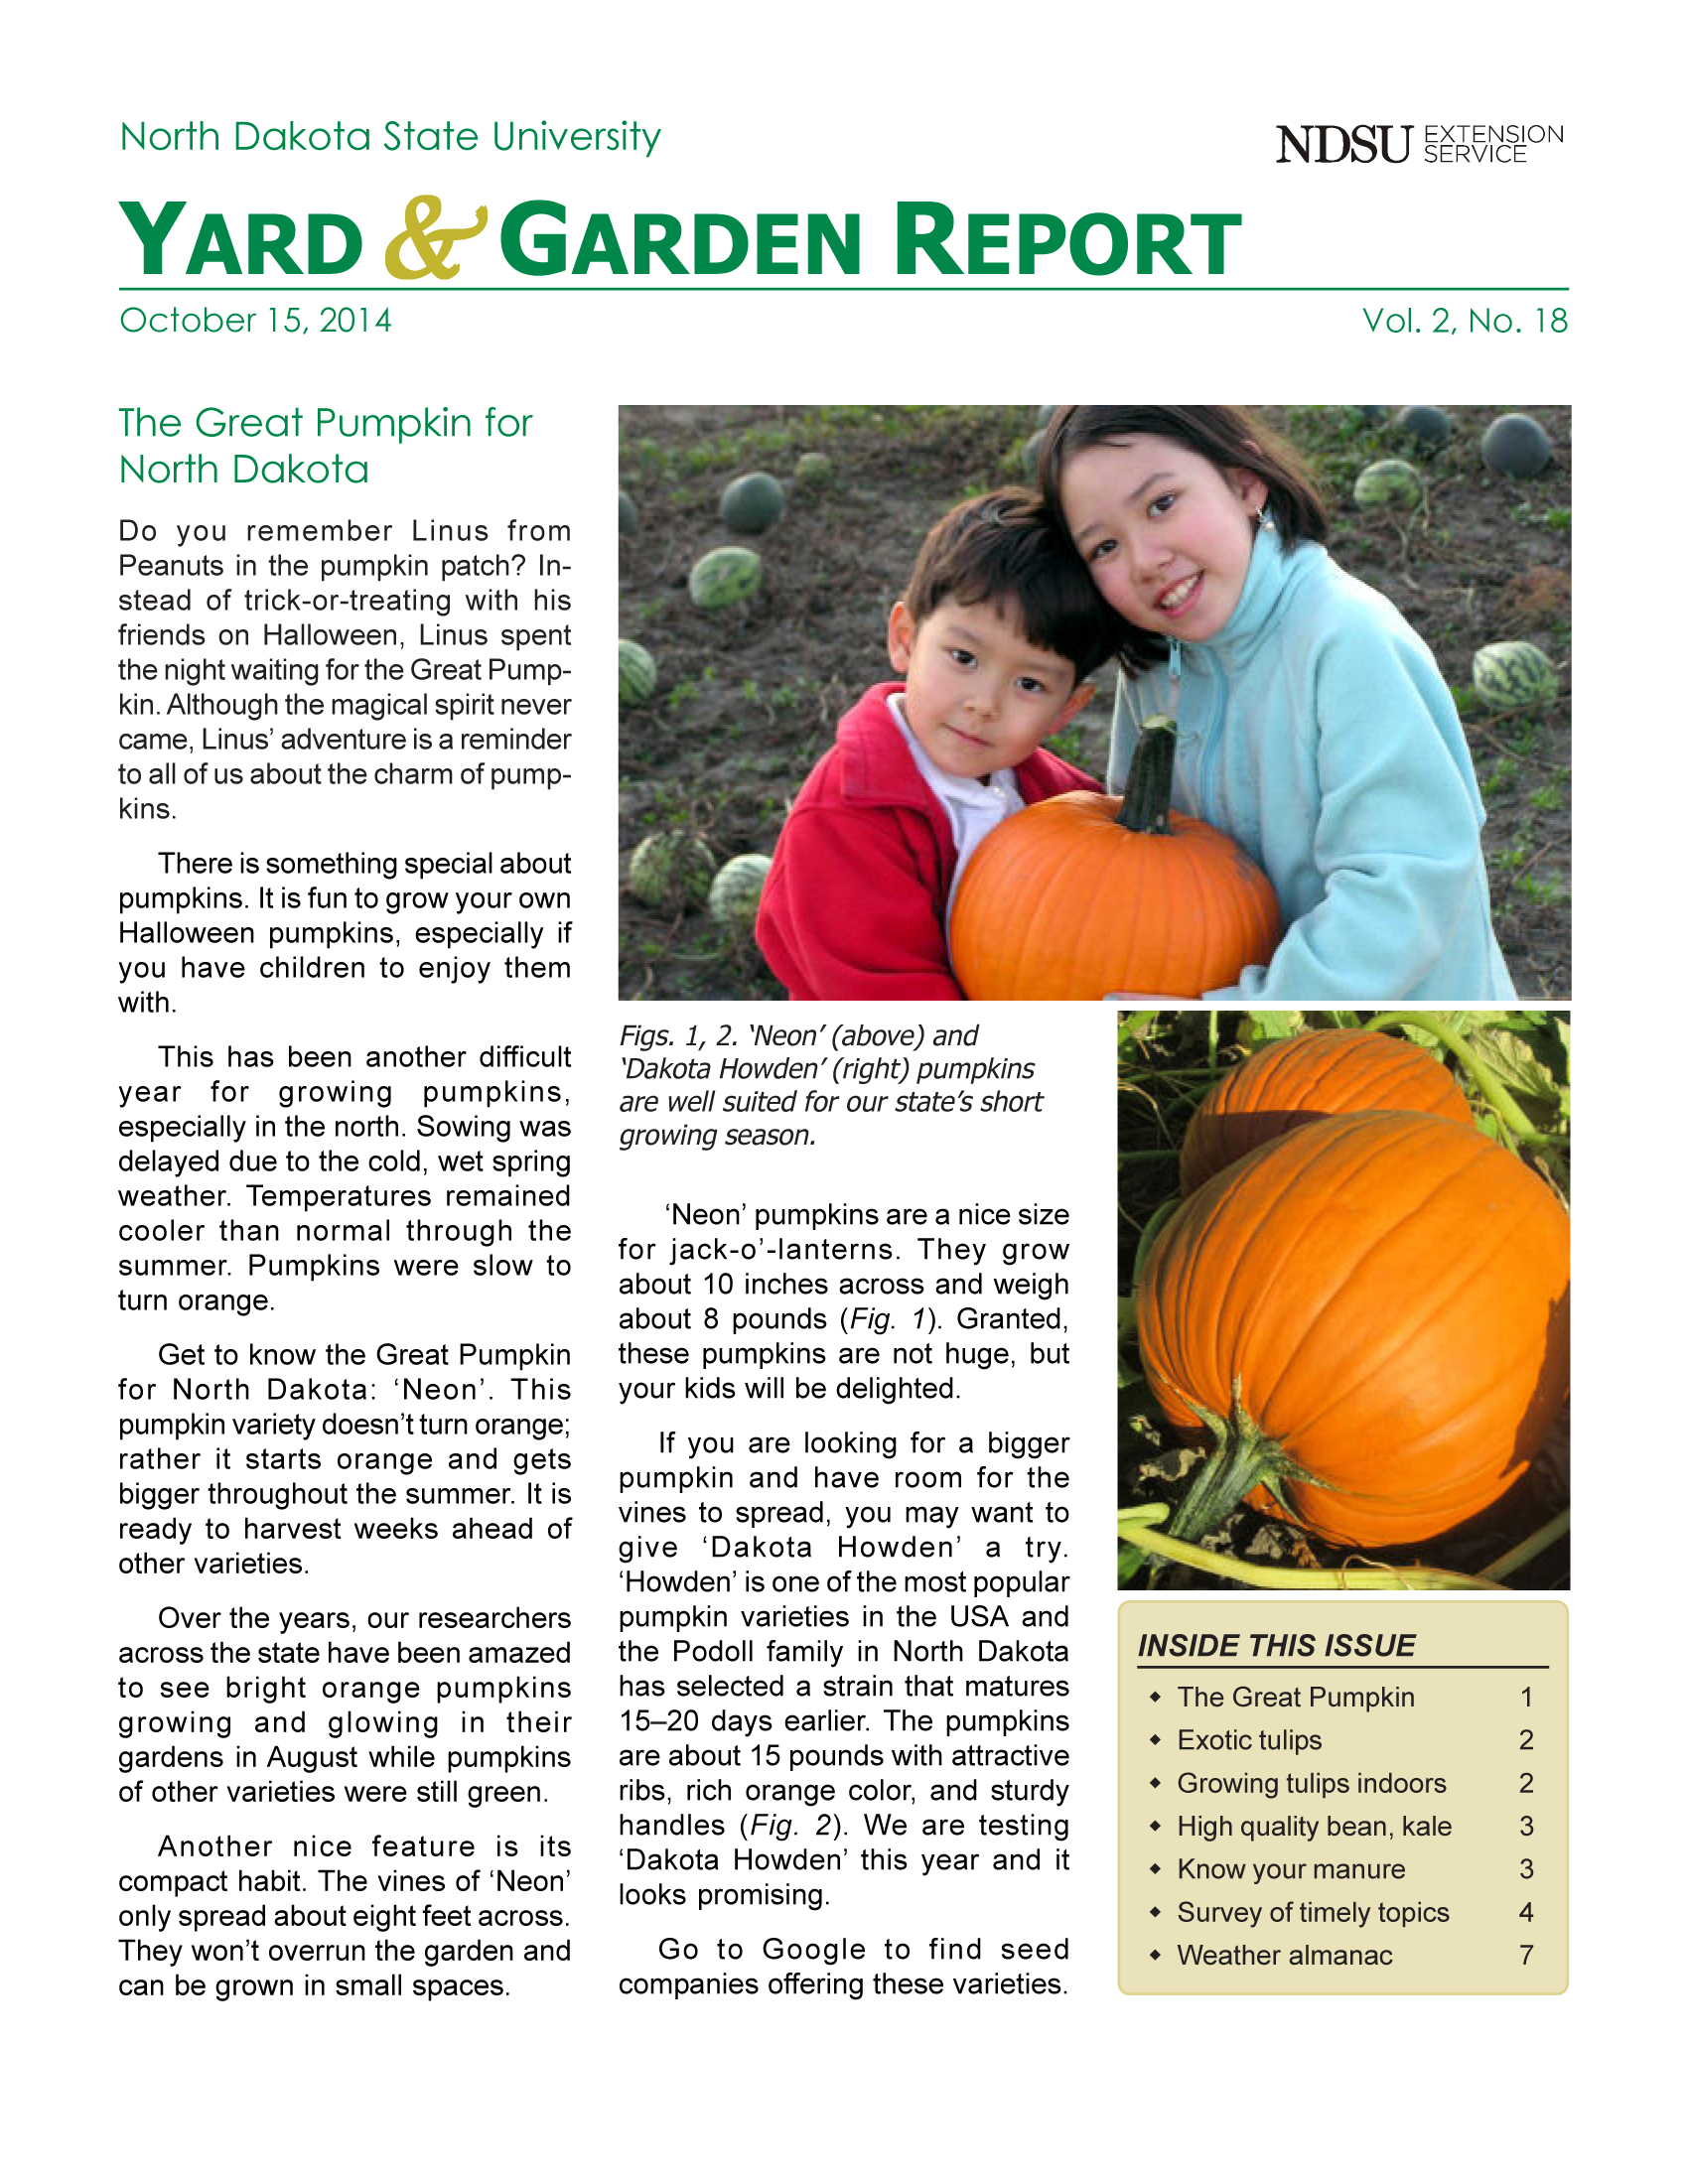 NDSU Yard & Garden Report for October 15, 2014